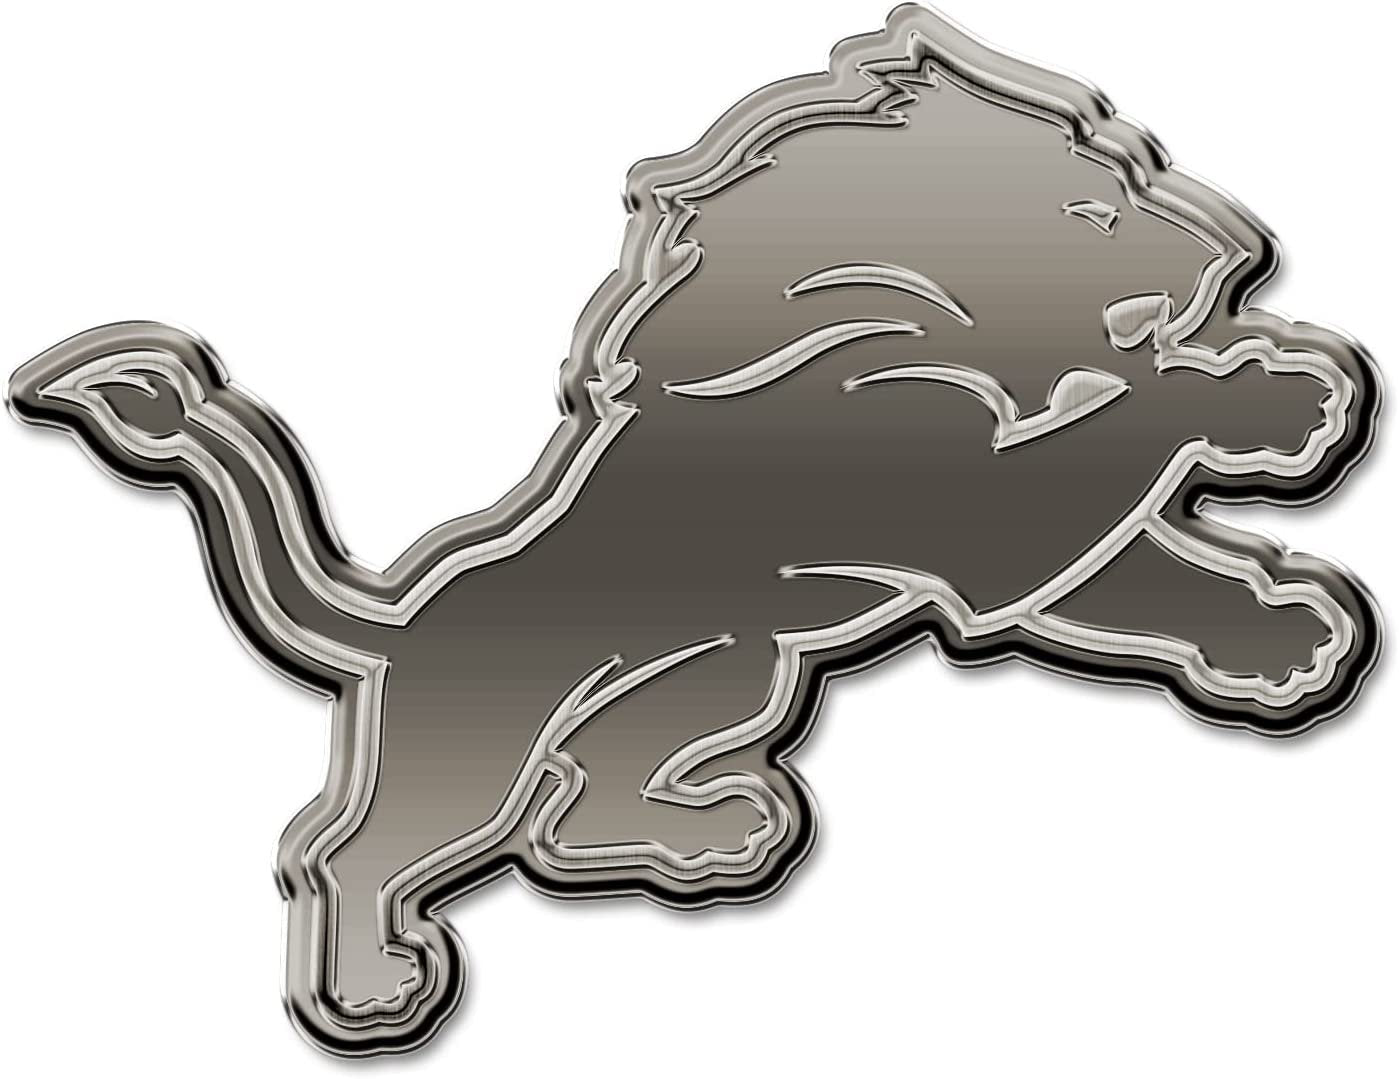 Detroit Lions Auto Emblem Solid Metal Raised Die Cut Antique Nickel Finish Adhesive Backing